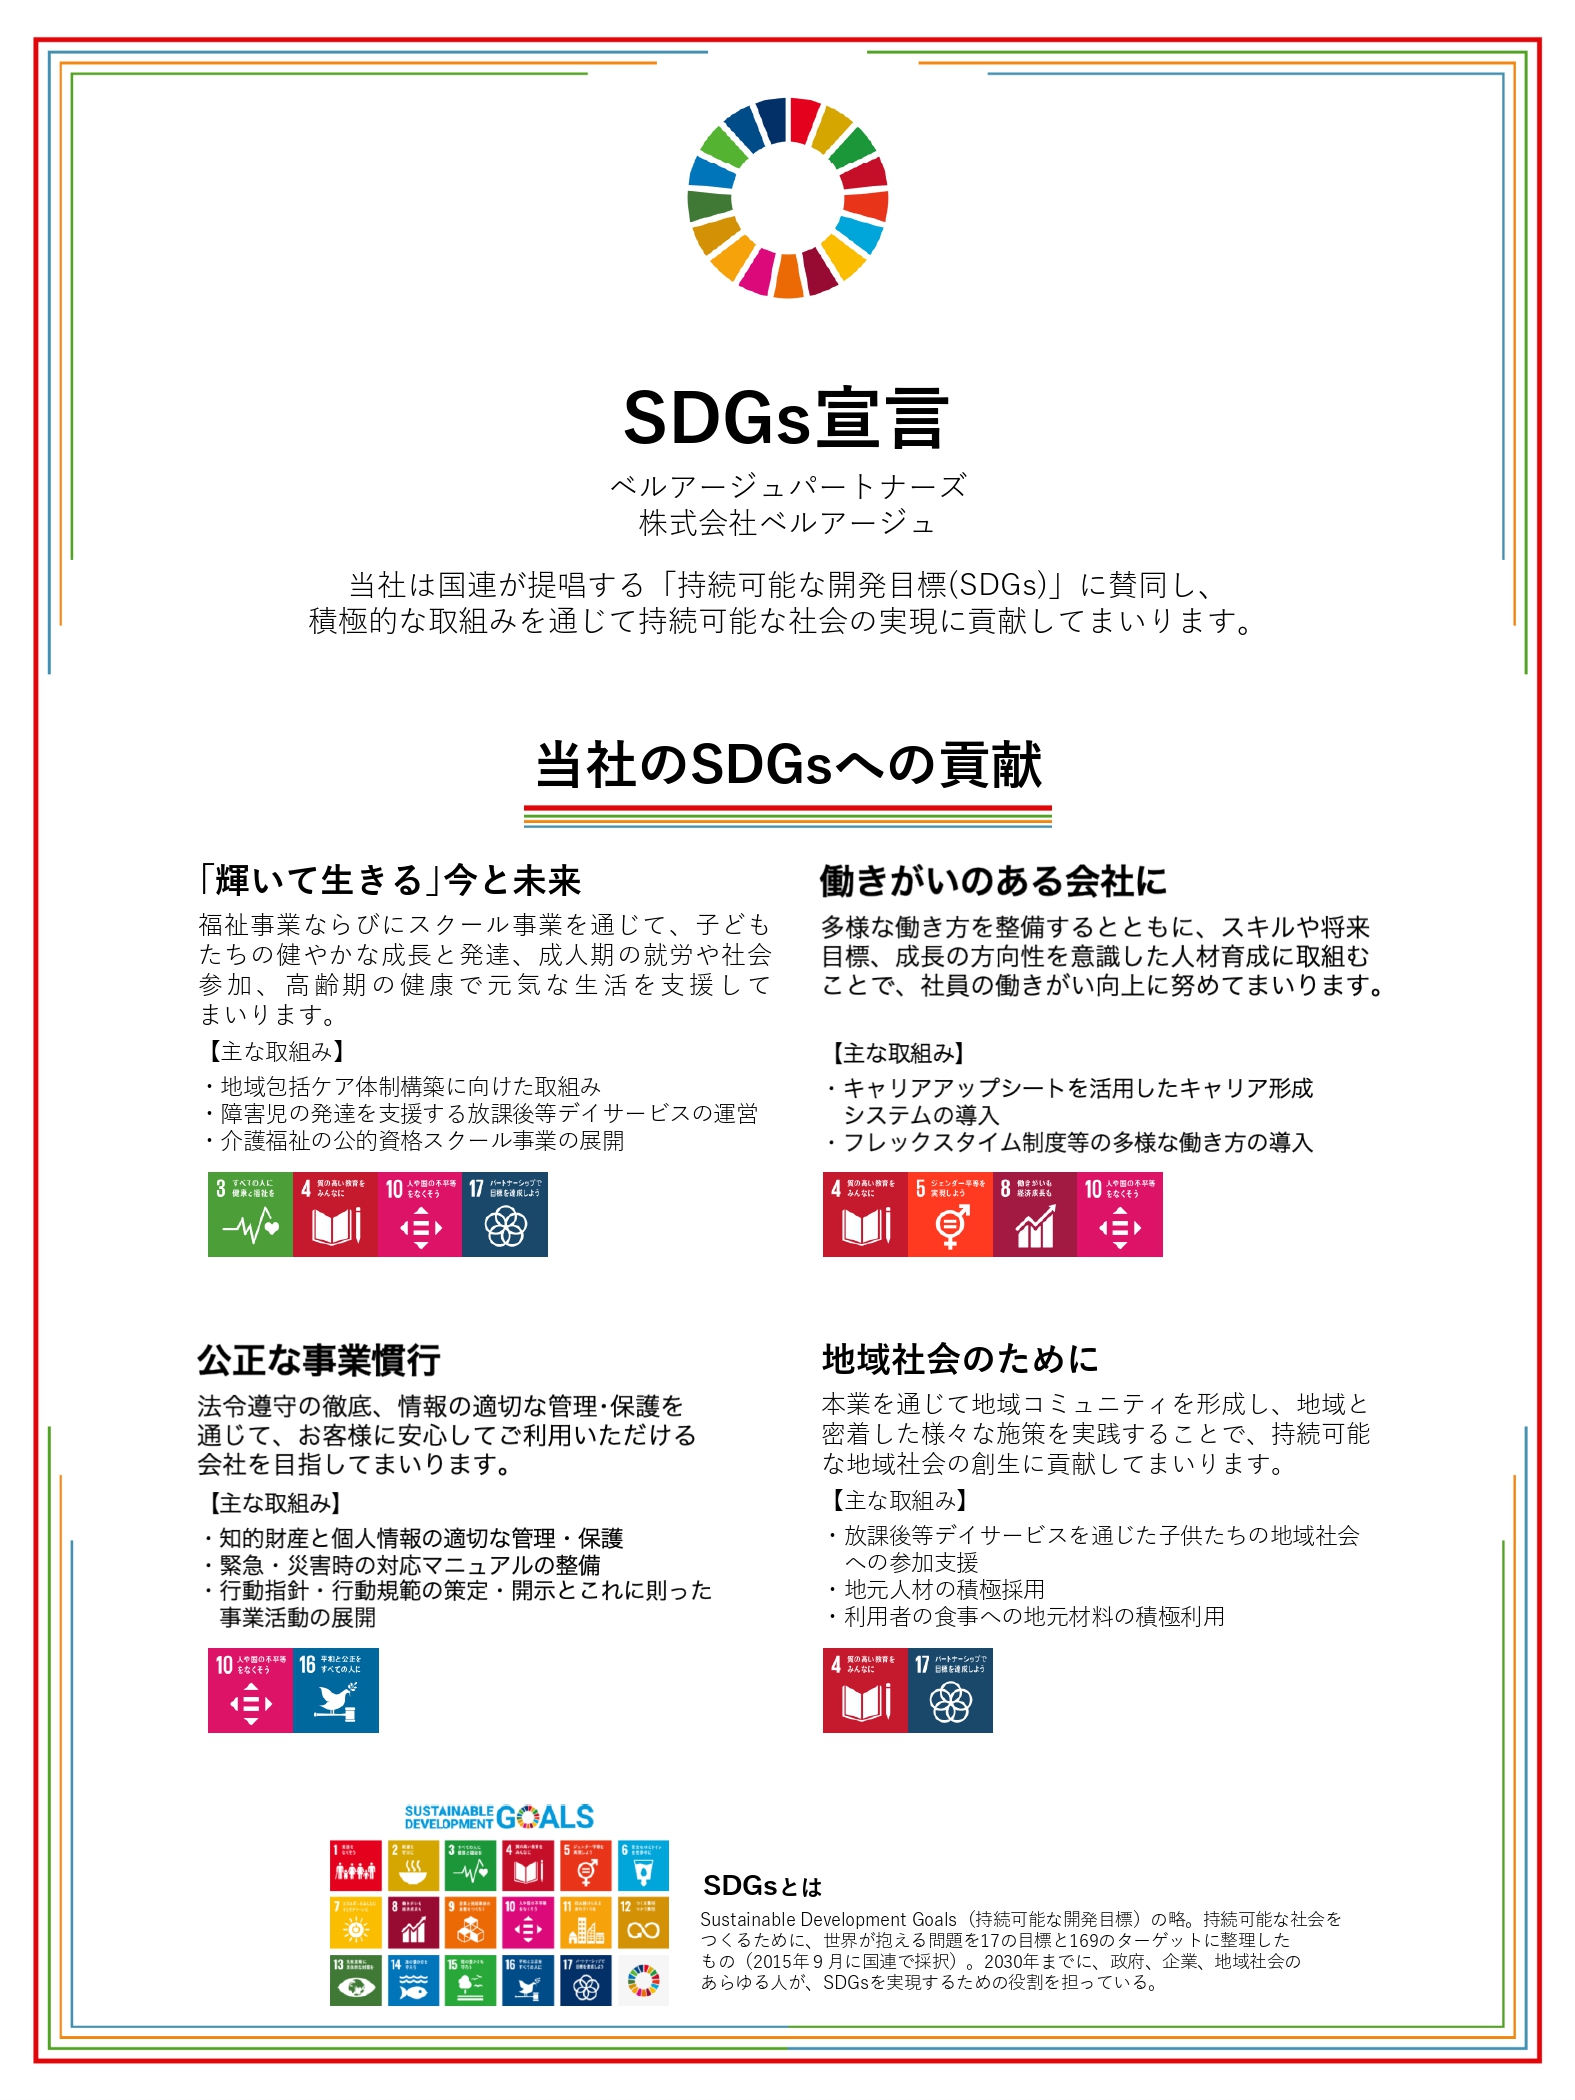 【SDGs週間】ベルアージュはSDGsに賛同し、持続可能な社会の実現に向けて取り組んでいます